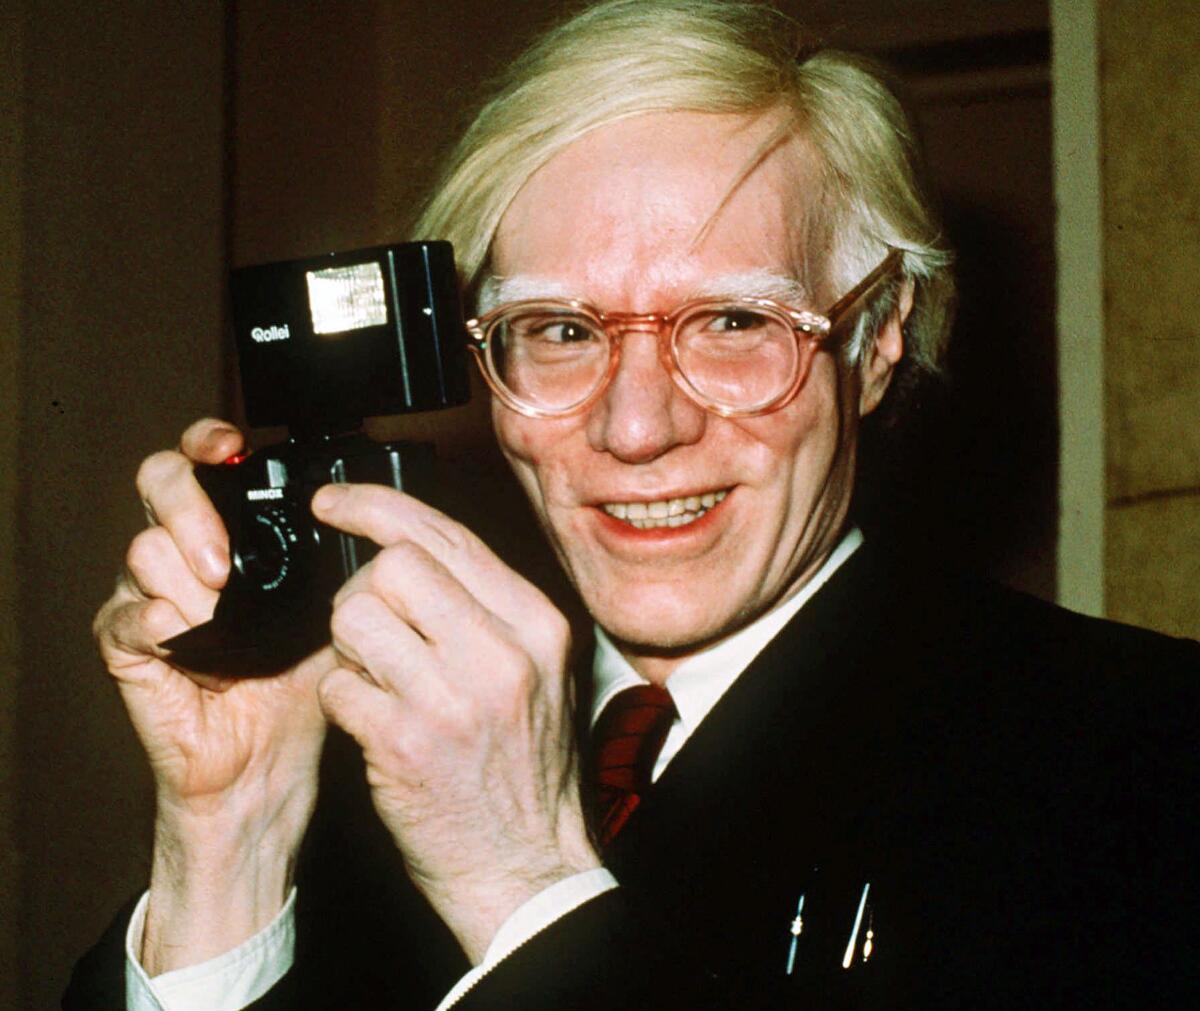 Andy Warhol ‘Mao’ screen print stolen from Orange Coast College